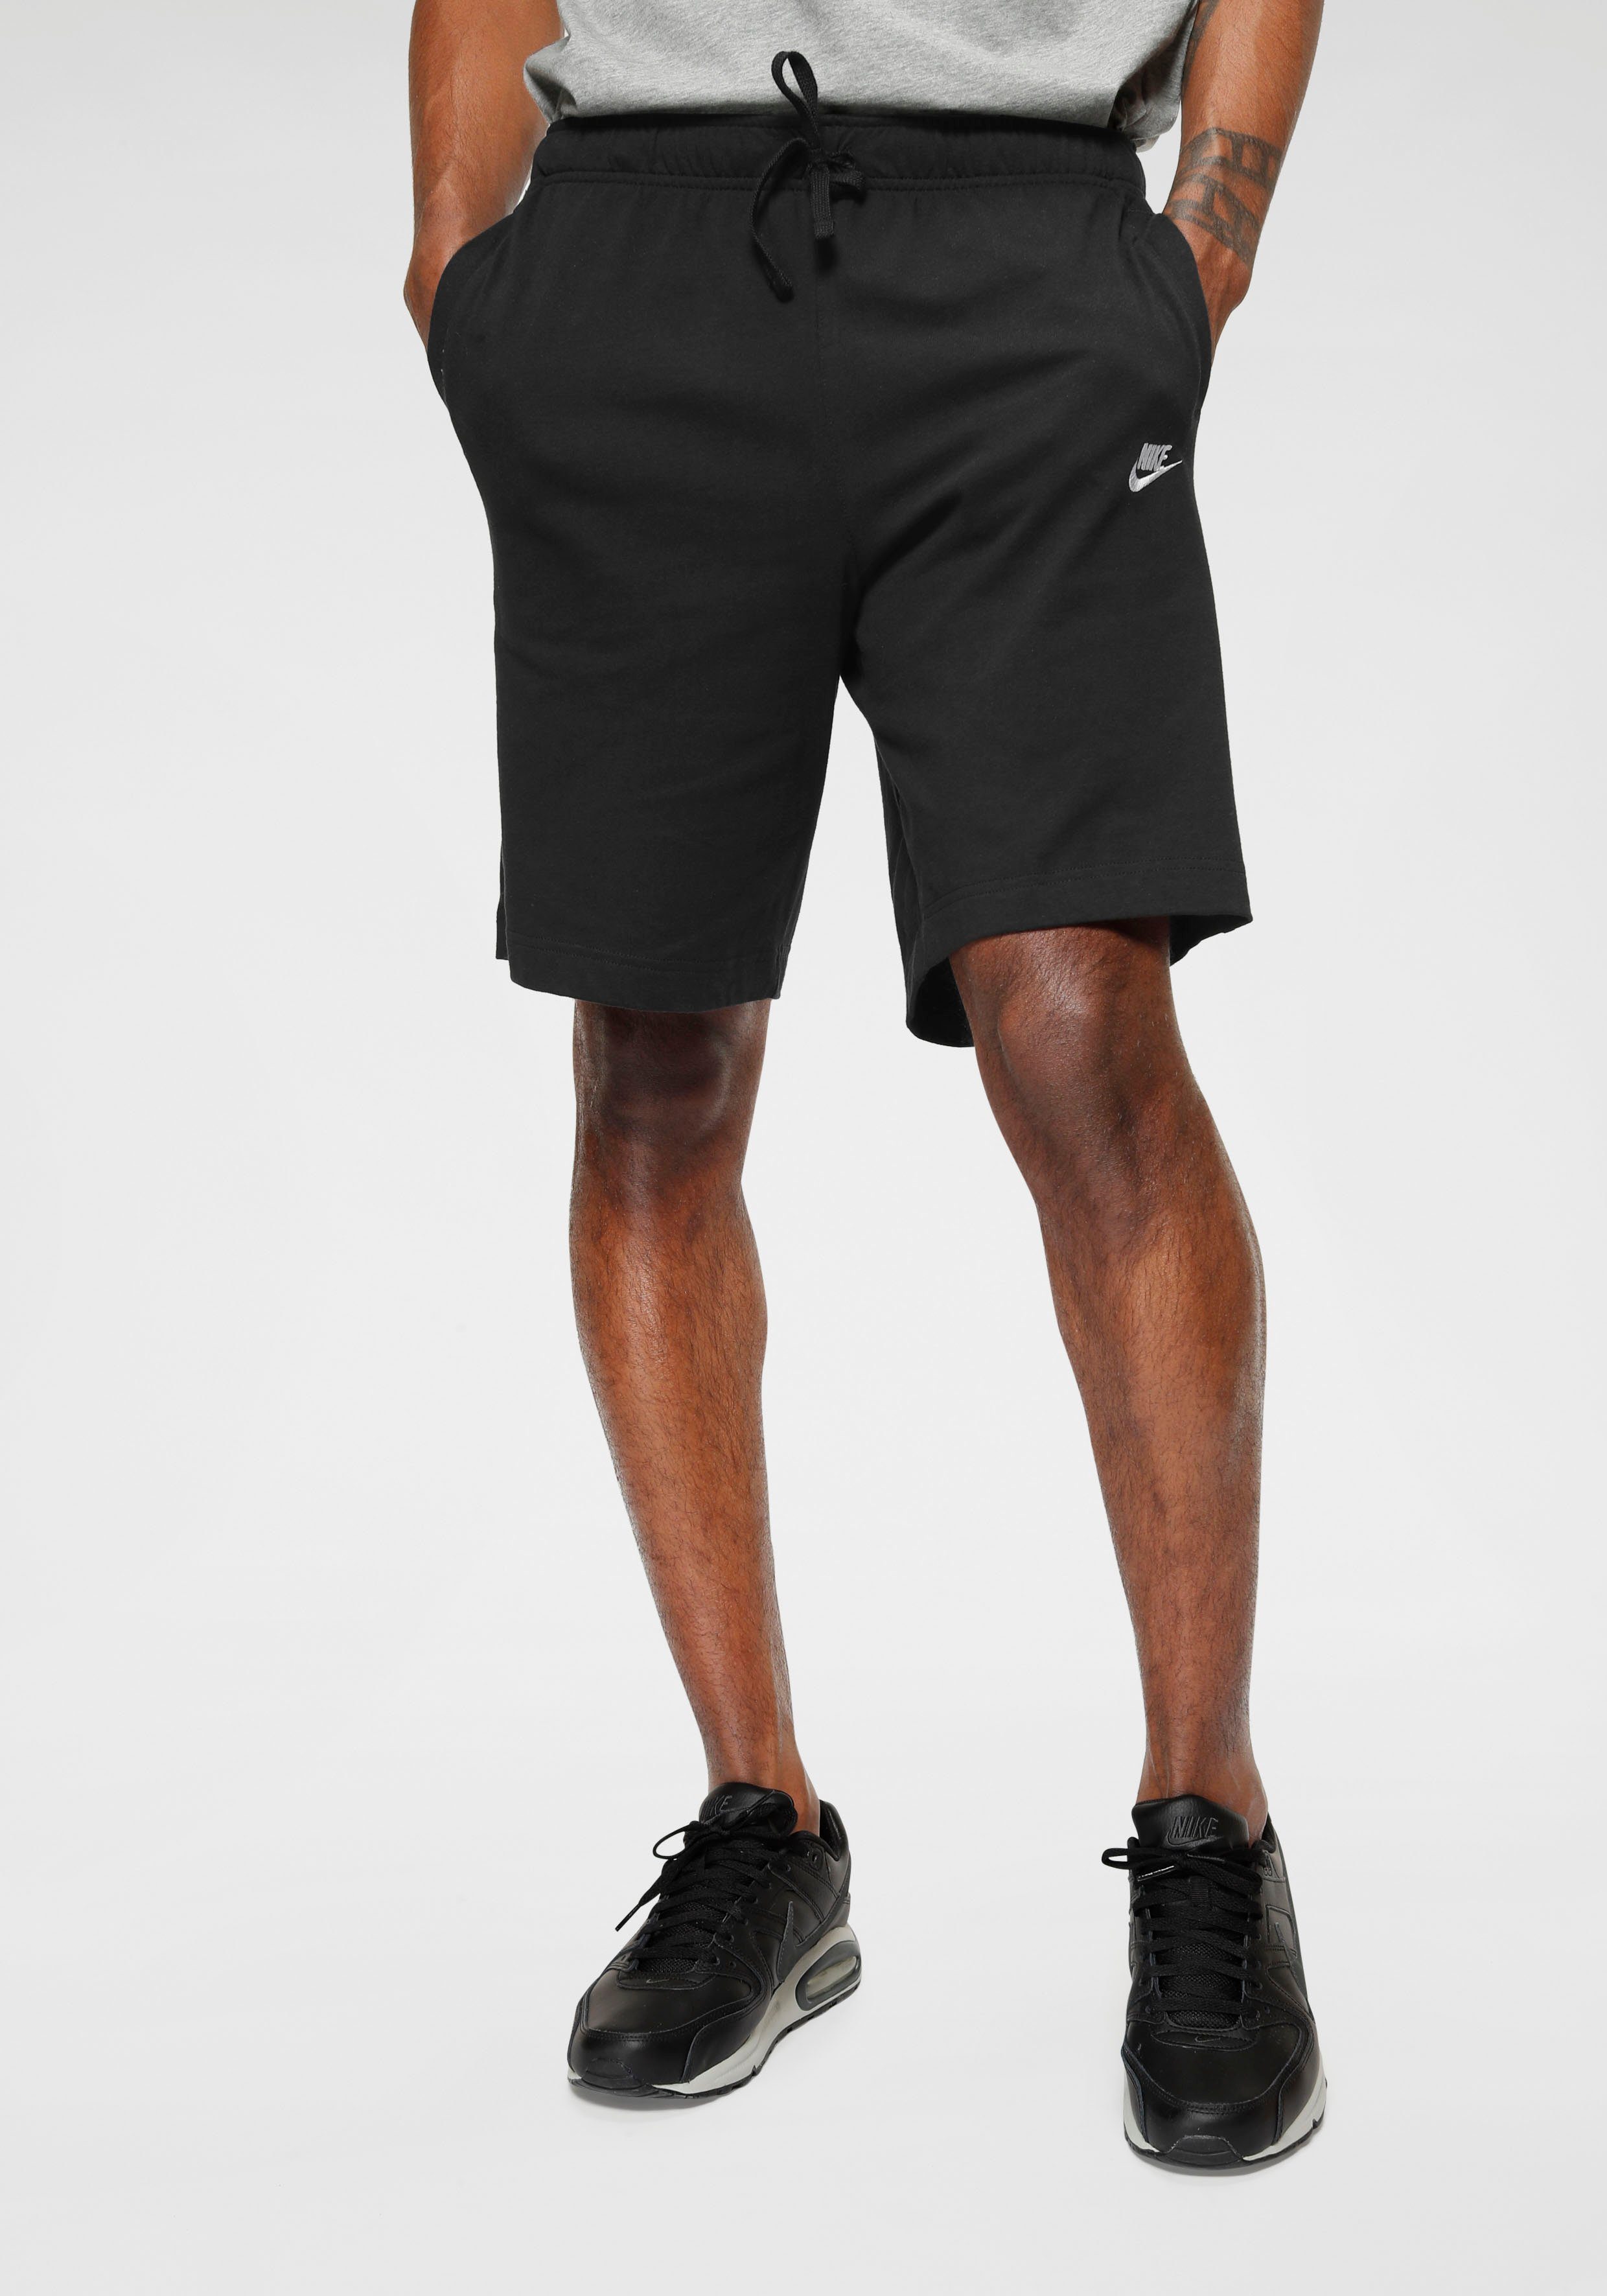 Nike Sportswear Shorts schwarz Club Shorts Men's